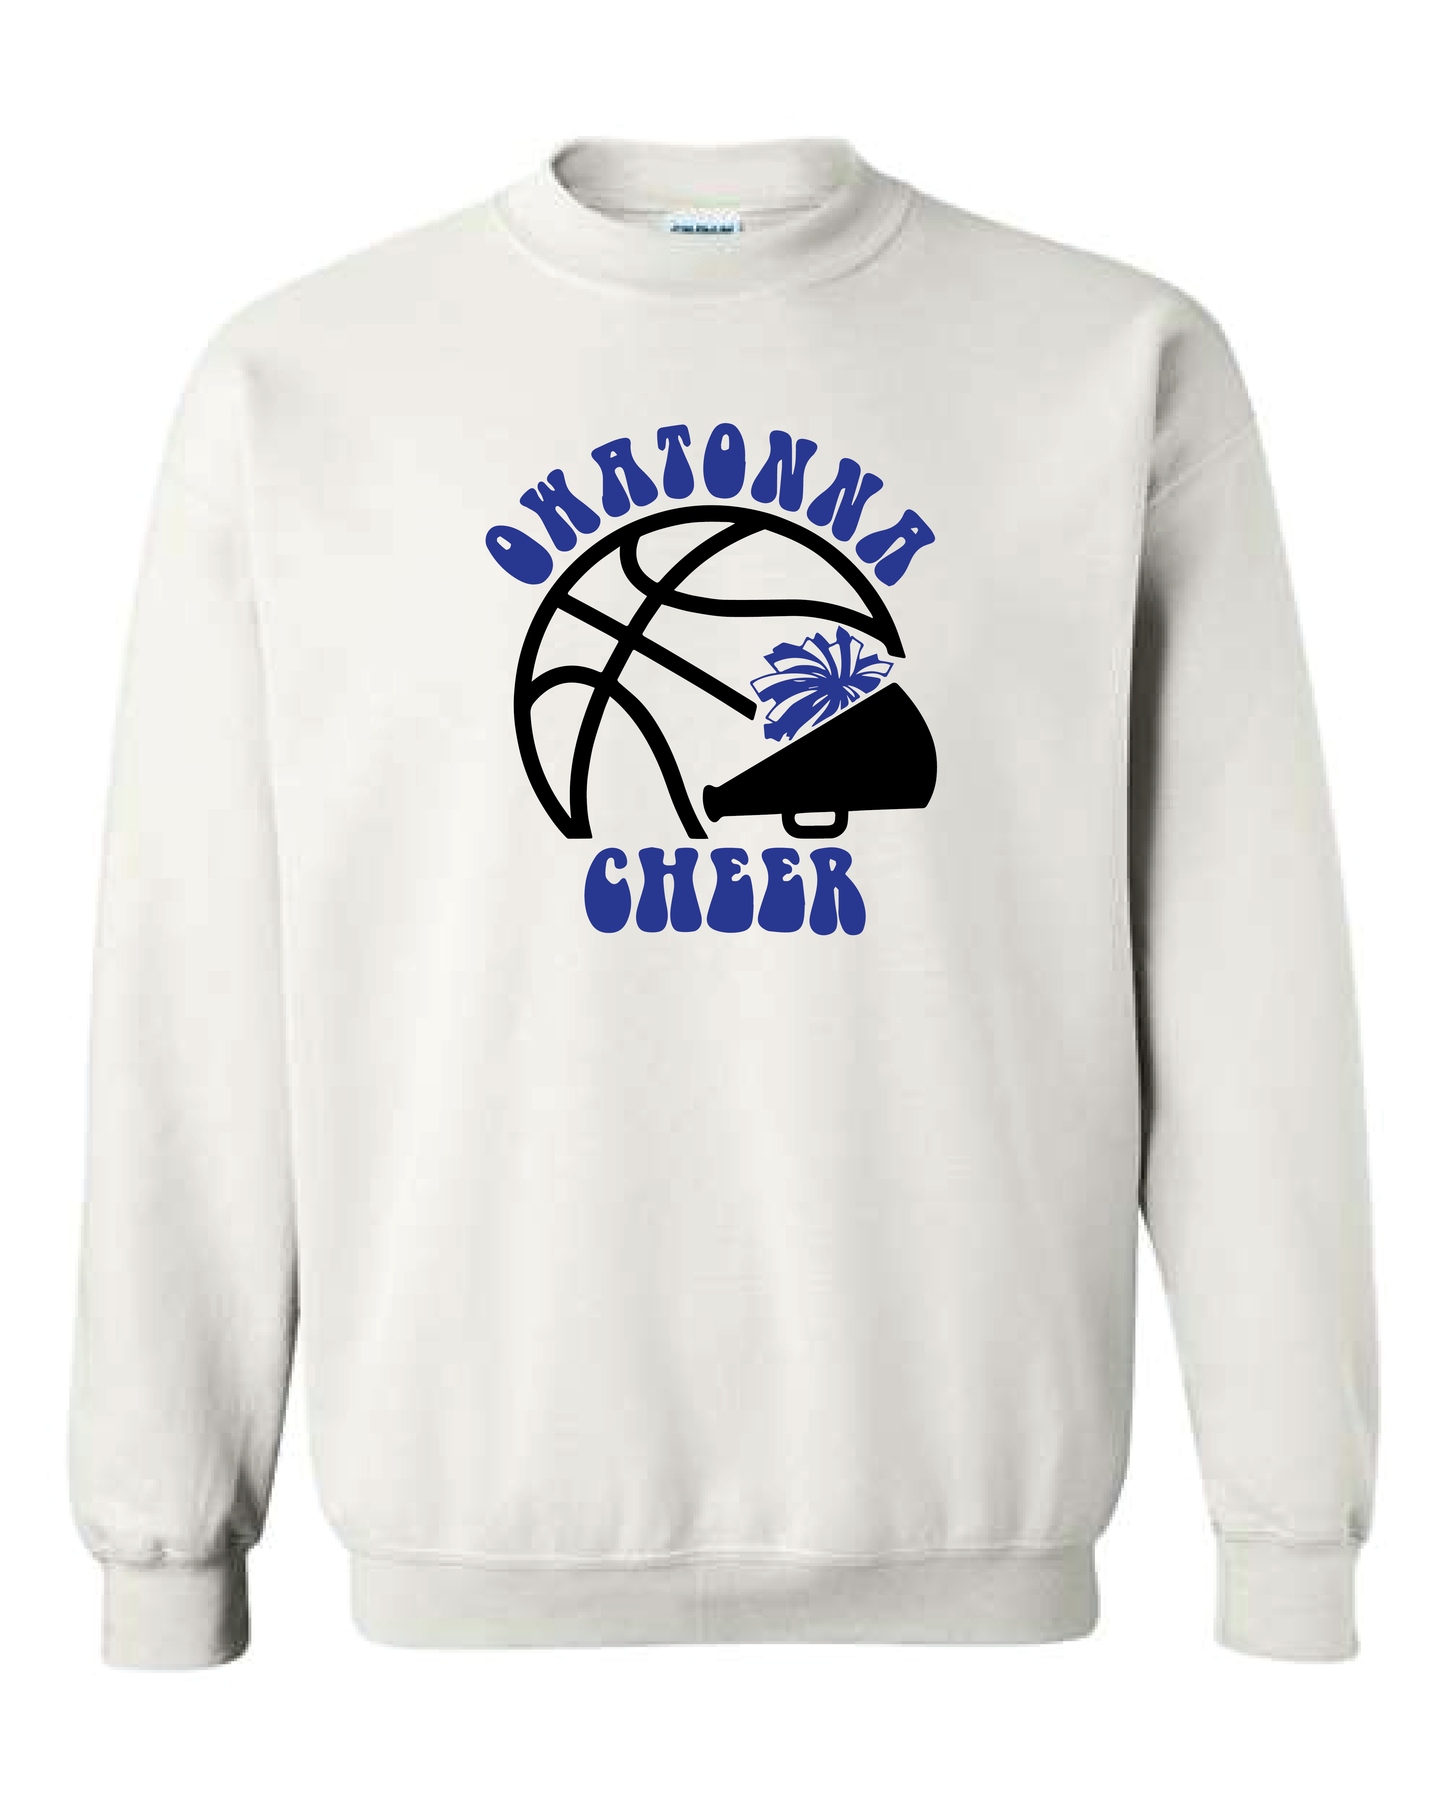 OHS Cheer Basketball Sweatshirt - Multiple Colors